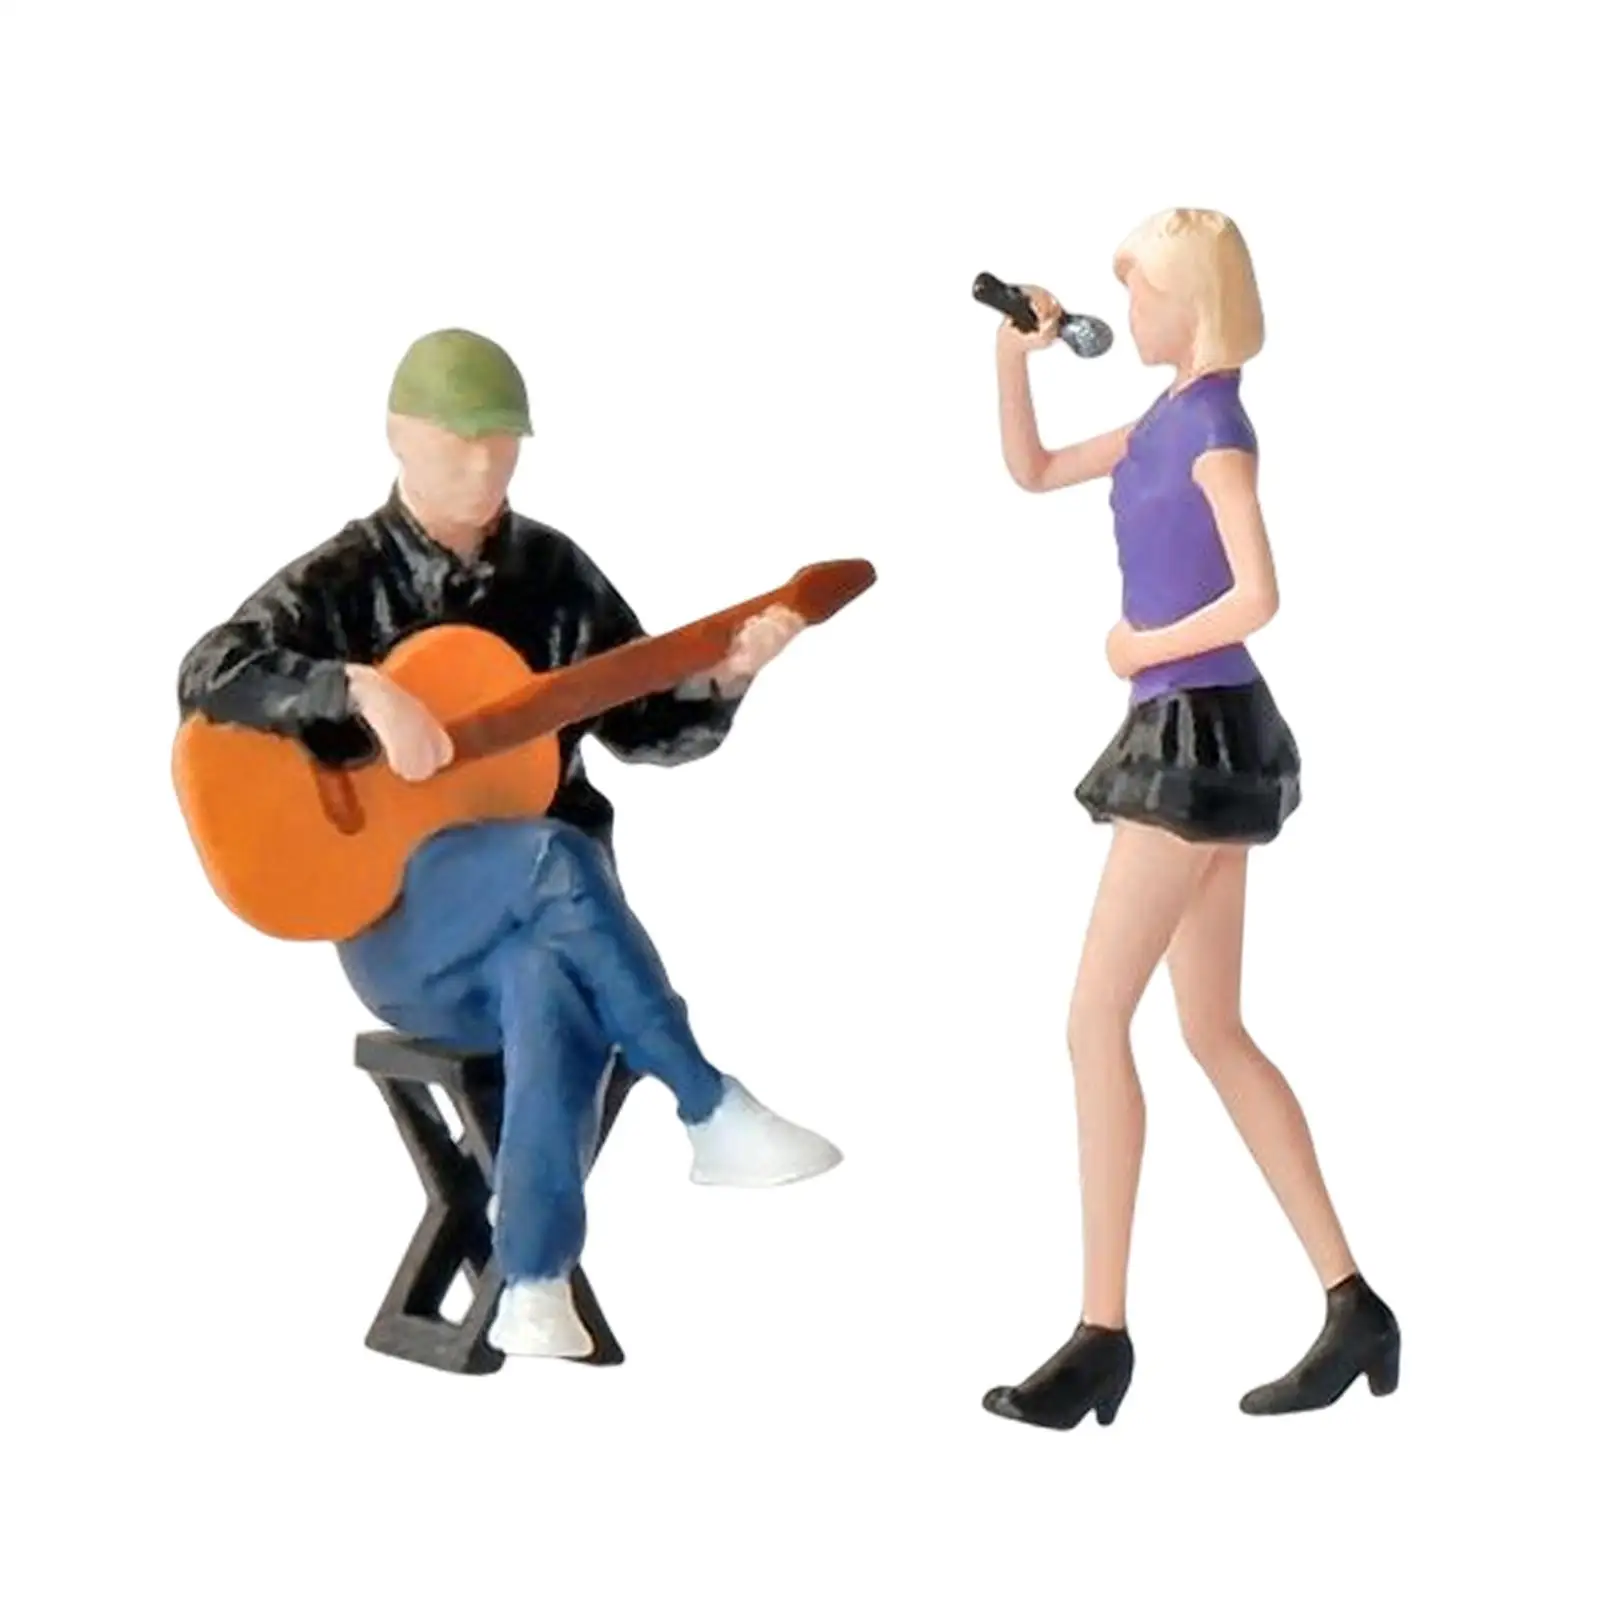 1:64 Guitarist and Singer Model Figures Desk Decoration People Figurines Diorama Miniature Realistic for Scenery Landscape Decor